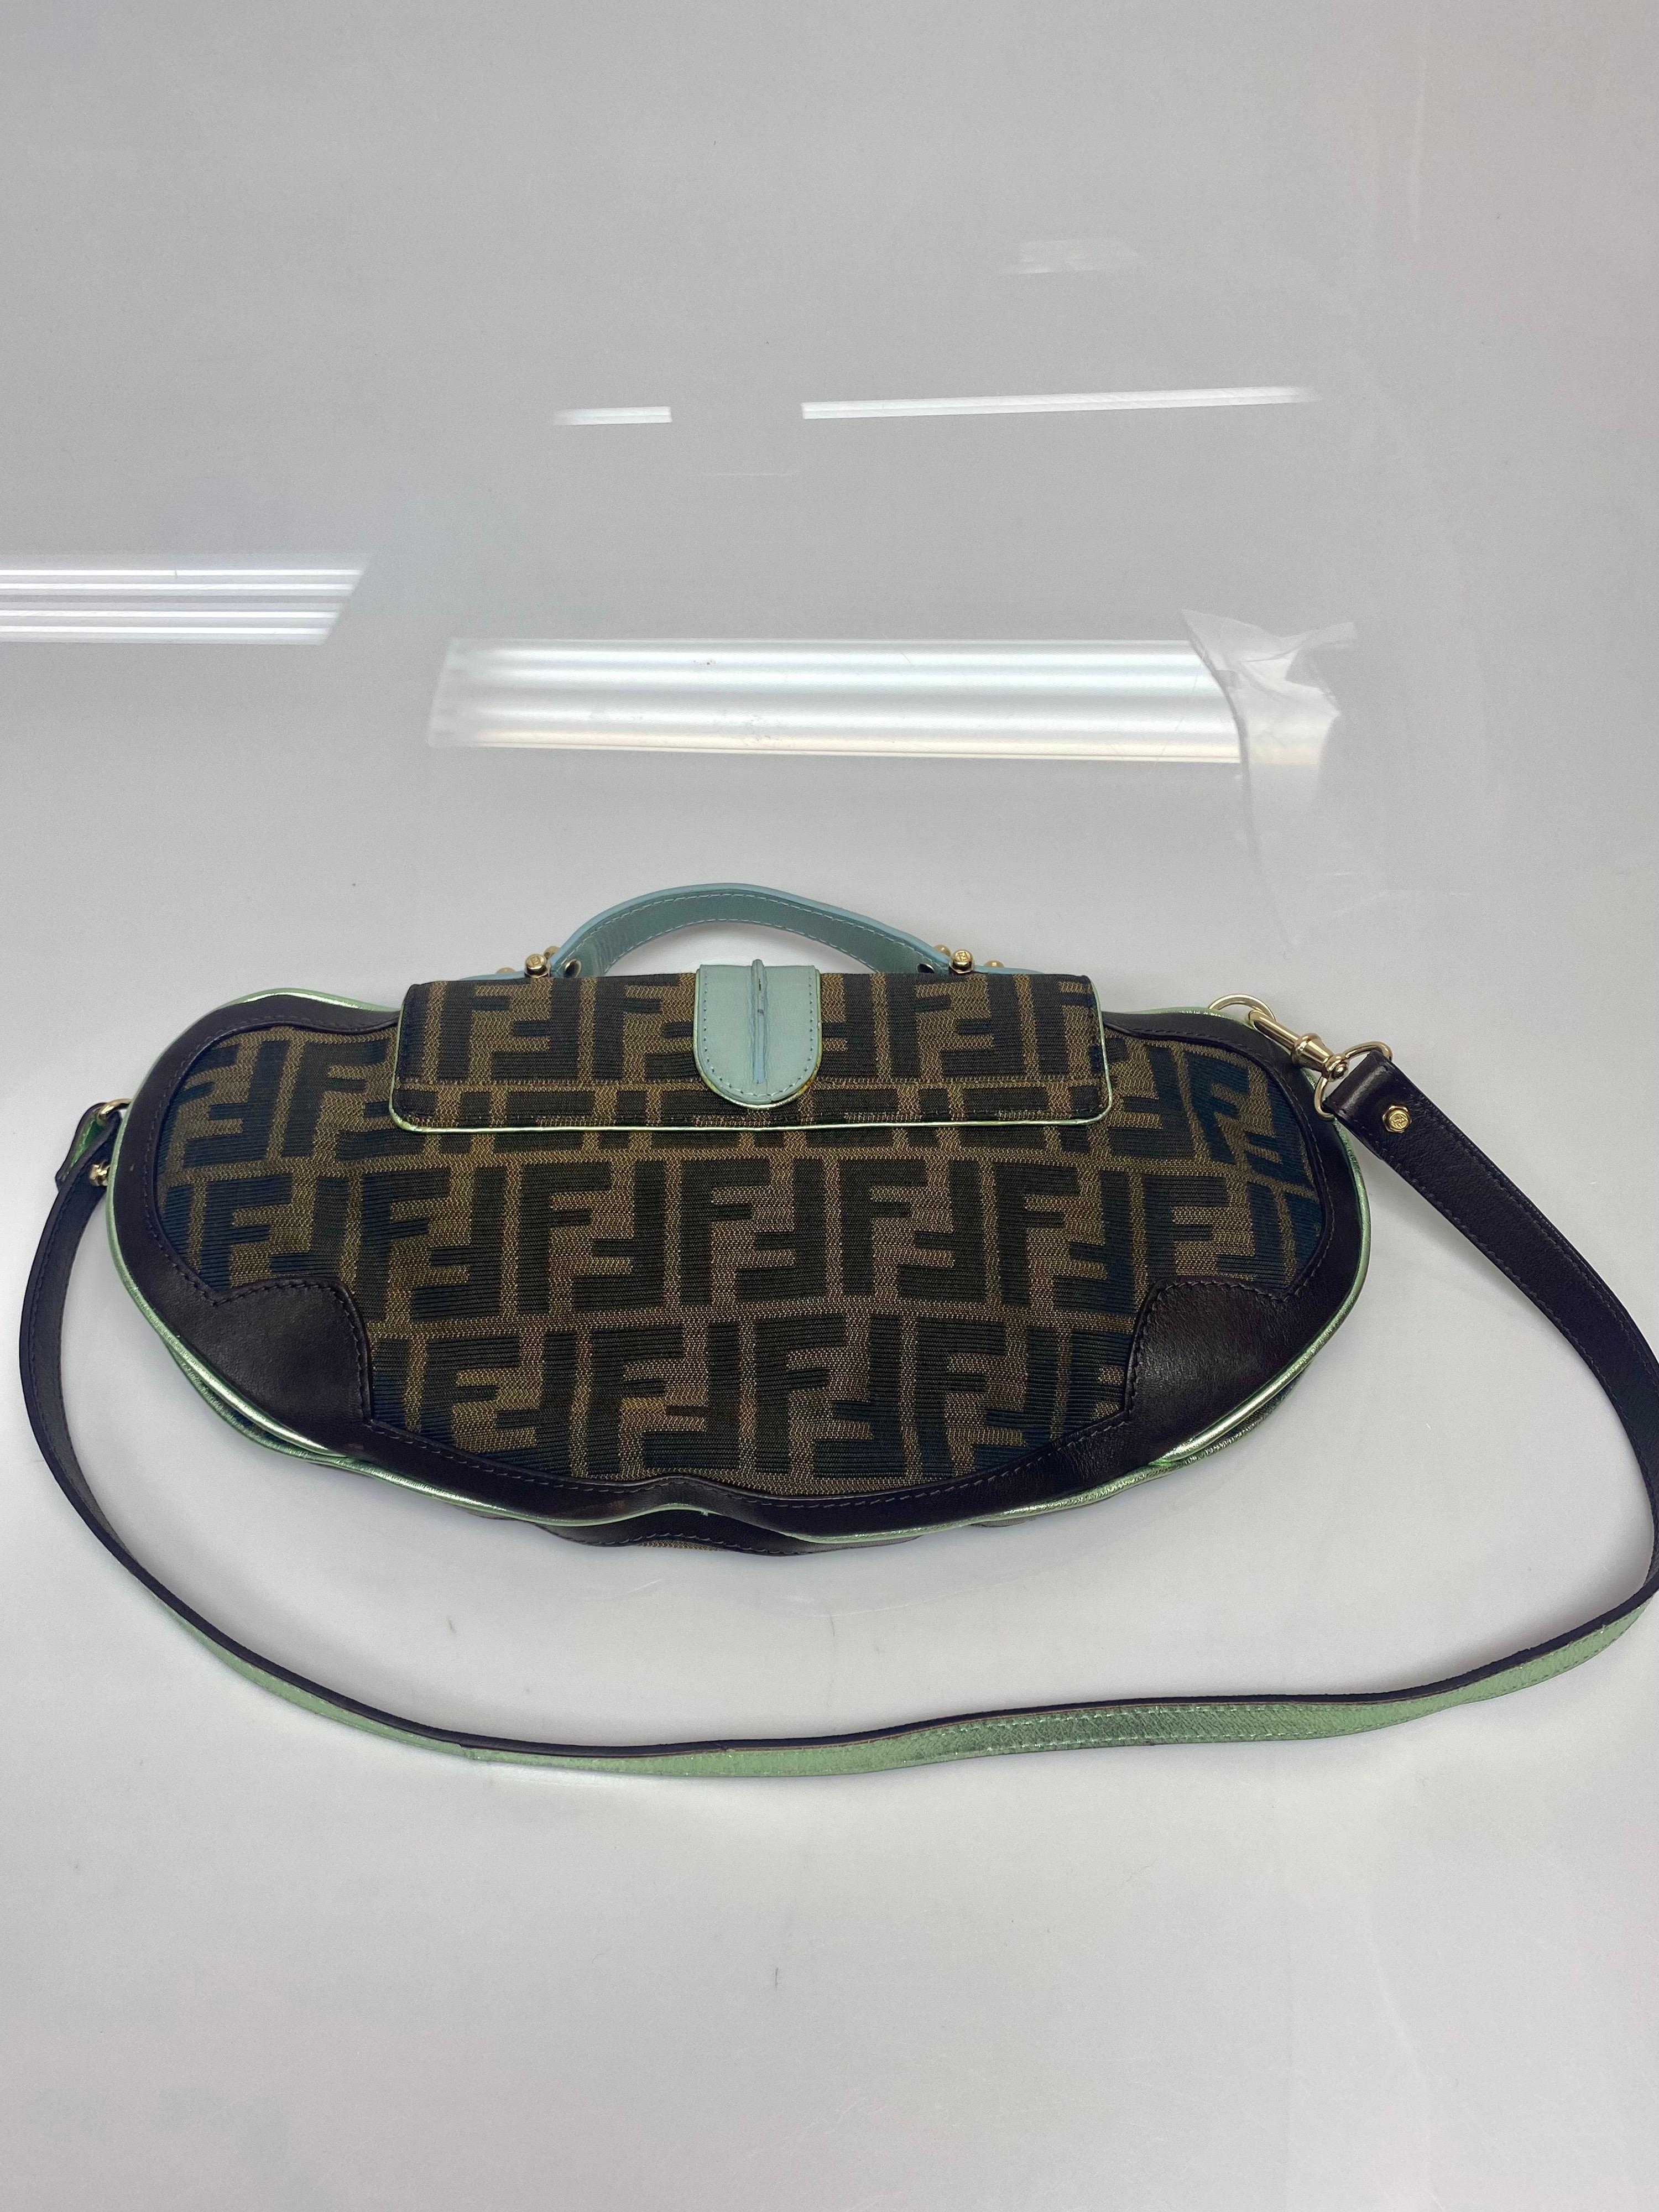 Fendi Canvas and Aqua leather Vanity Mirror Clutch Handbag In Good Condition For Sale In West Palm Beach, FL